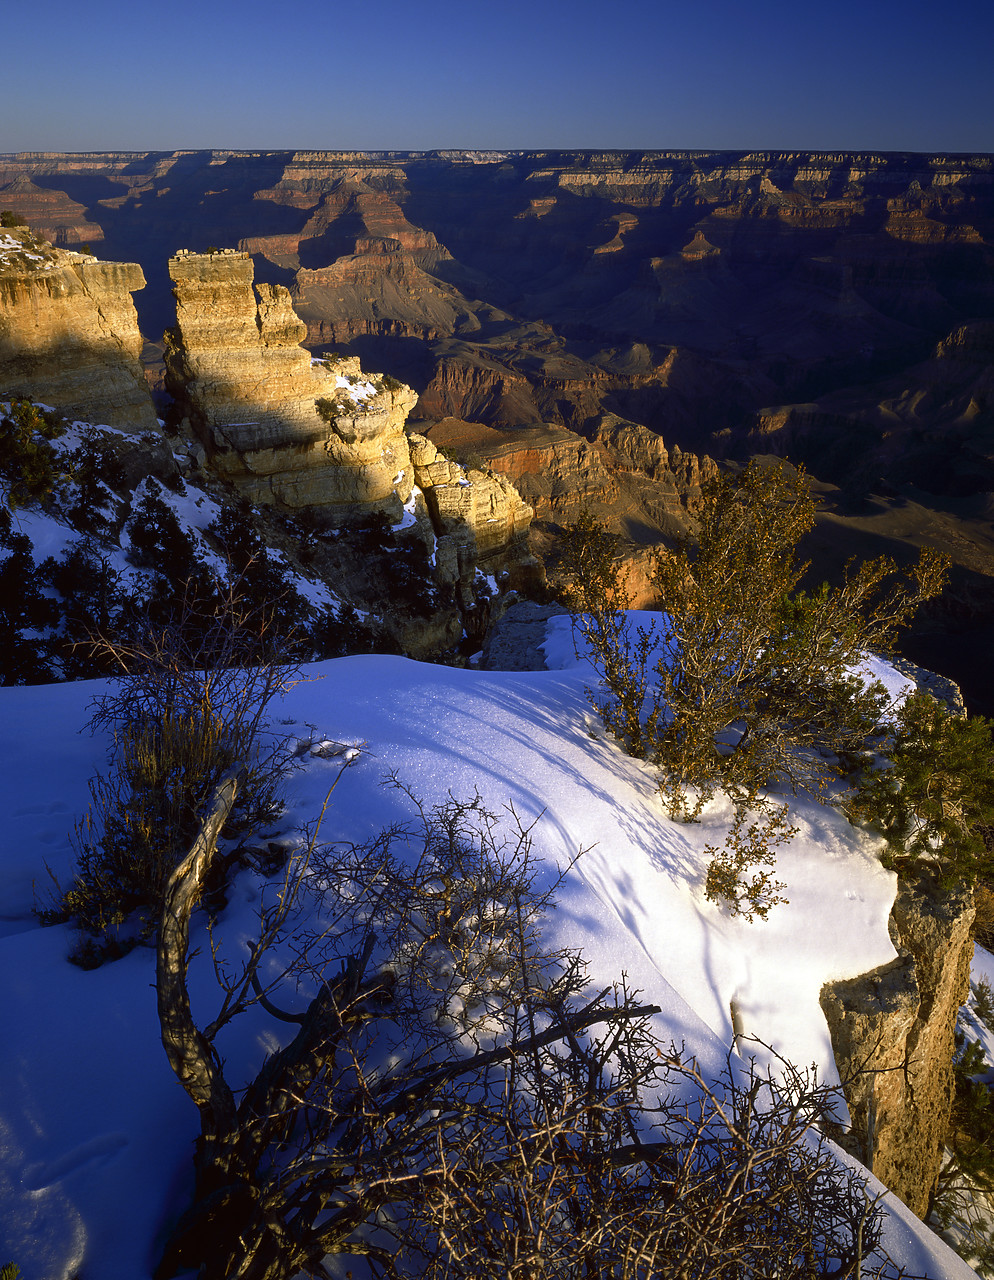 #891877-4 - Yavapai Point in Winter, Grand Canyon National Park, Arizona, USA